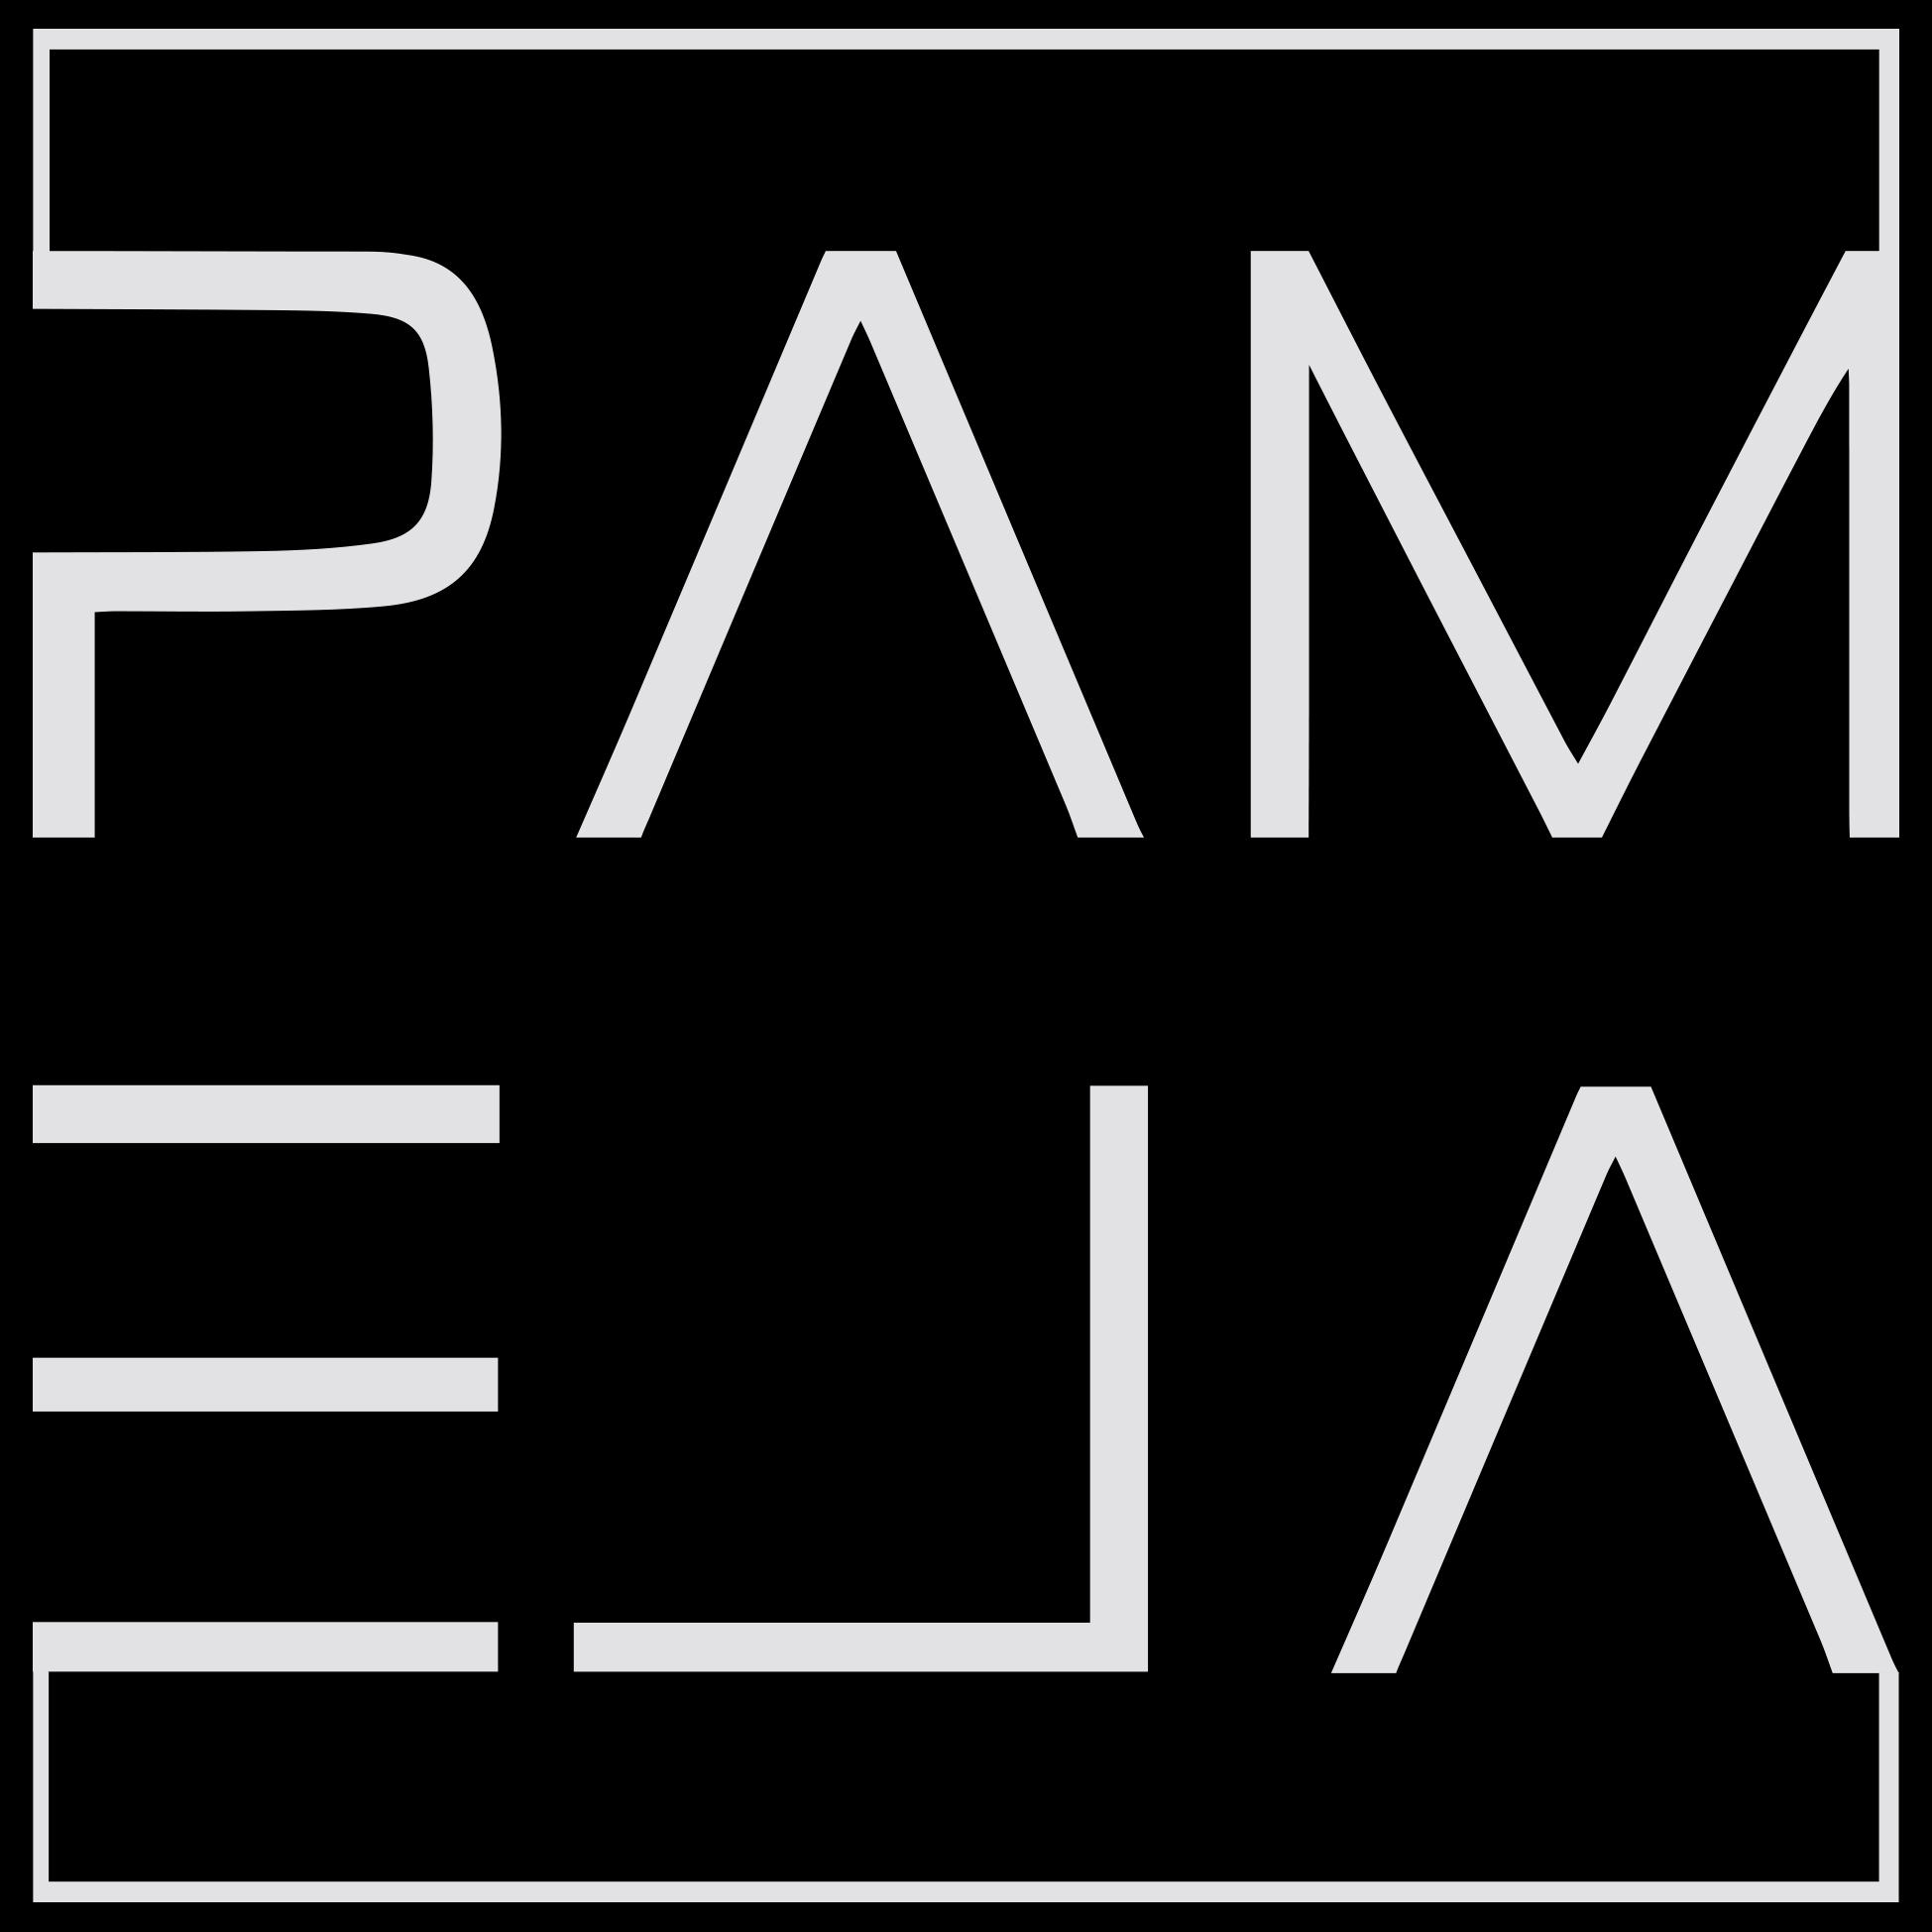 Pamela on the beach logo